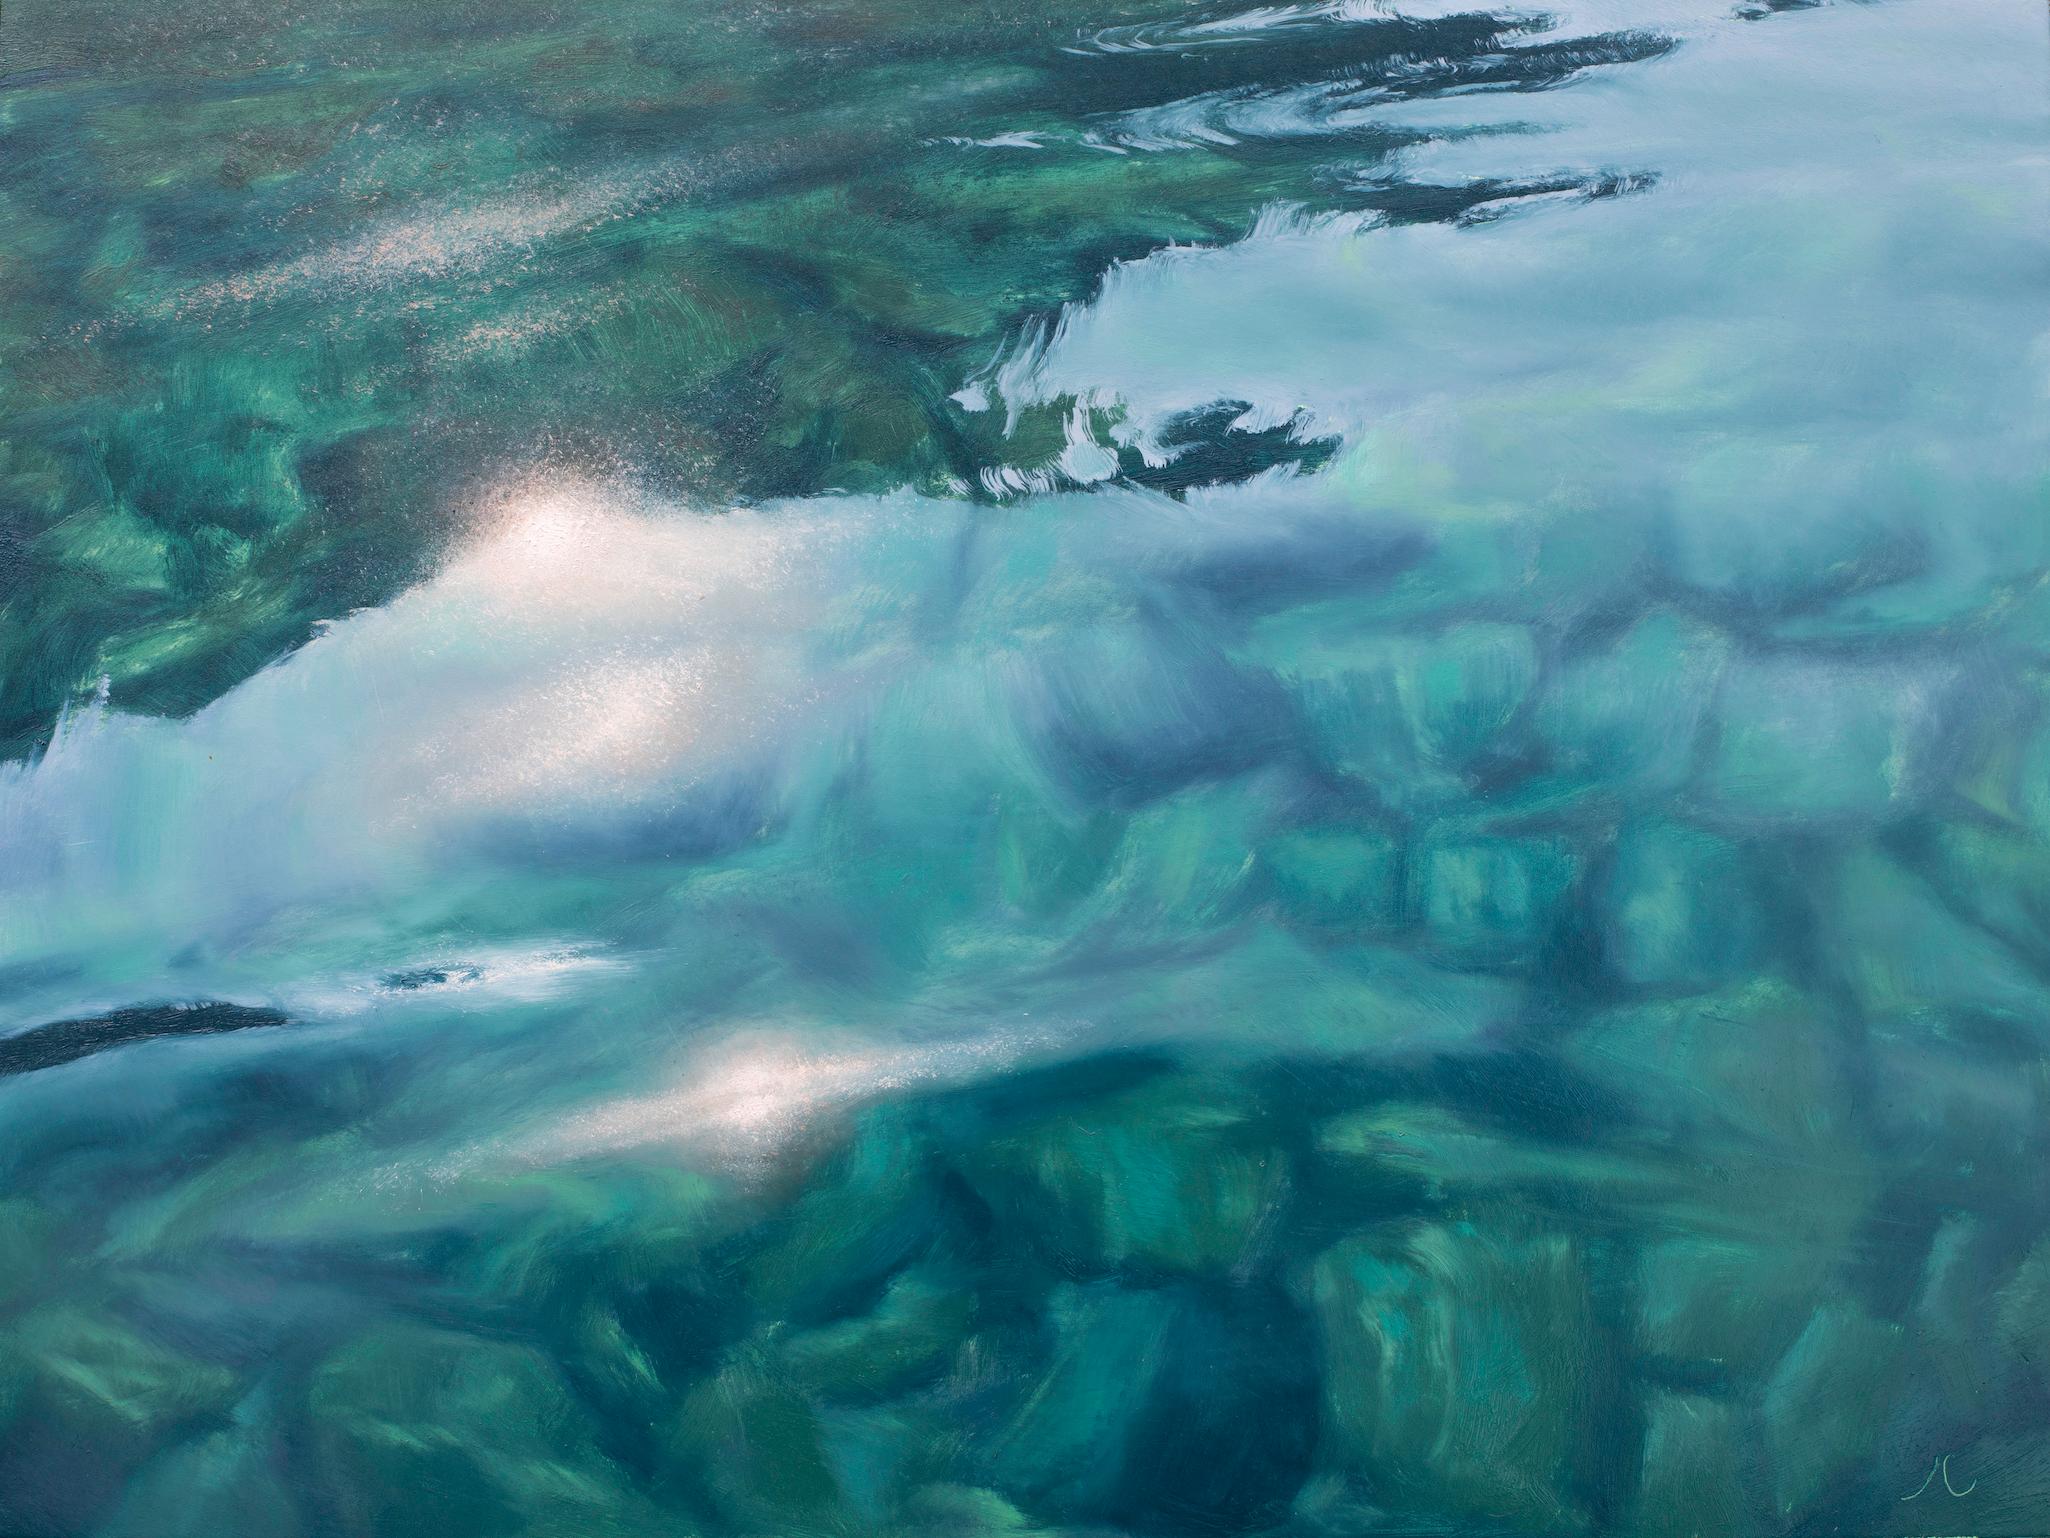 Irina Cumberland Landscape Painting - Meditation on Water I-original realism water pattern painting-contemporary Art